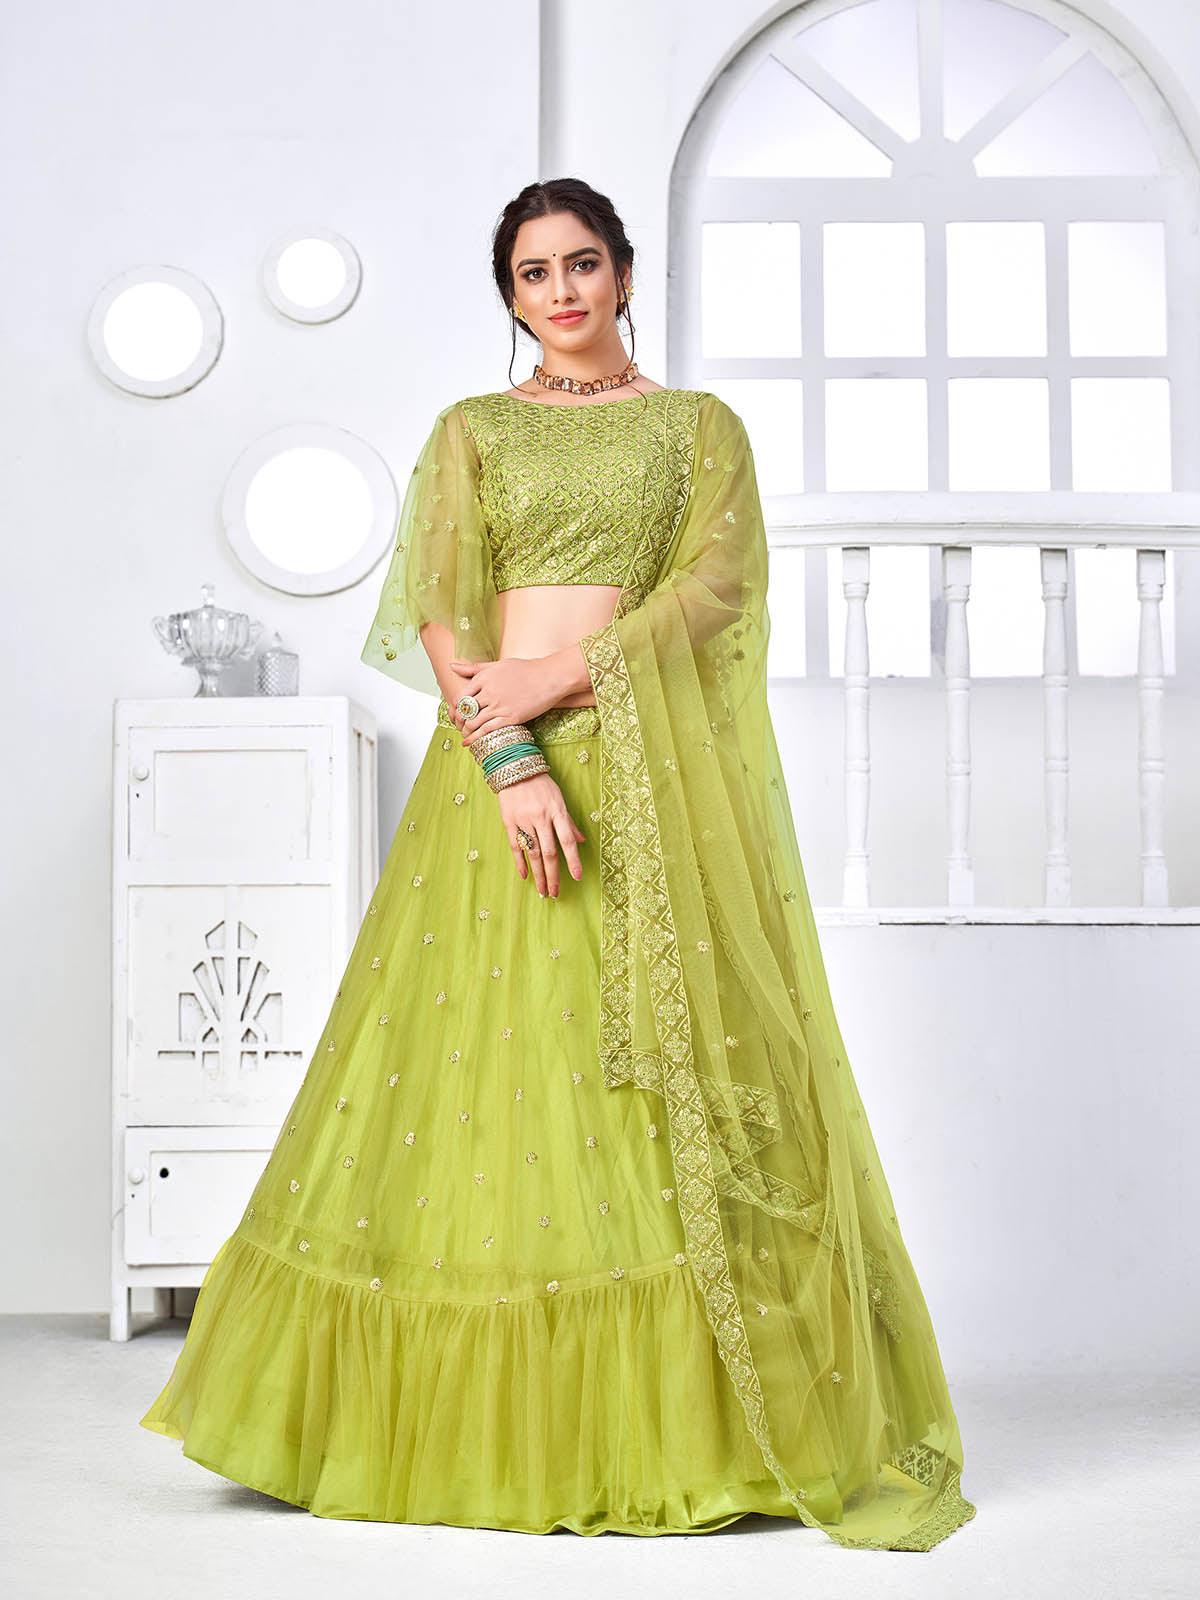 Alia Bhatt will convince you to wear a neon lehenga this summer wedding  season |VOGUE India